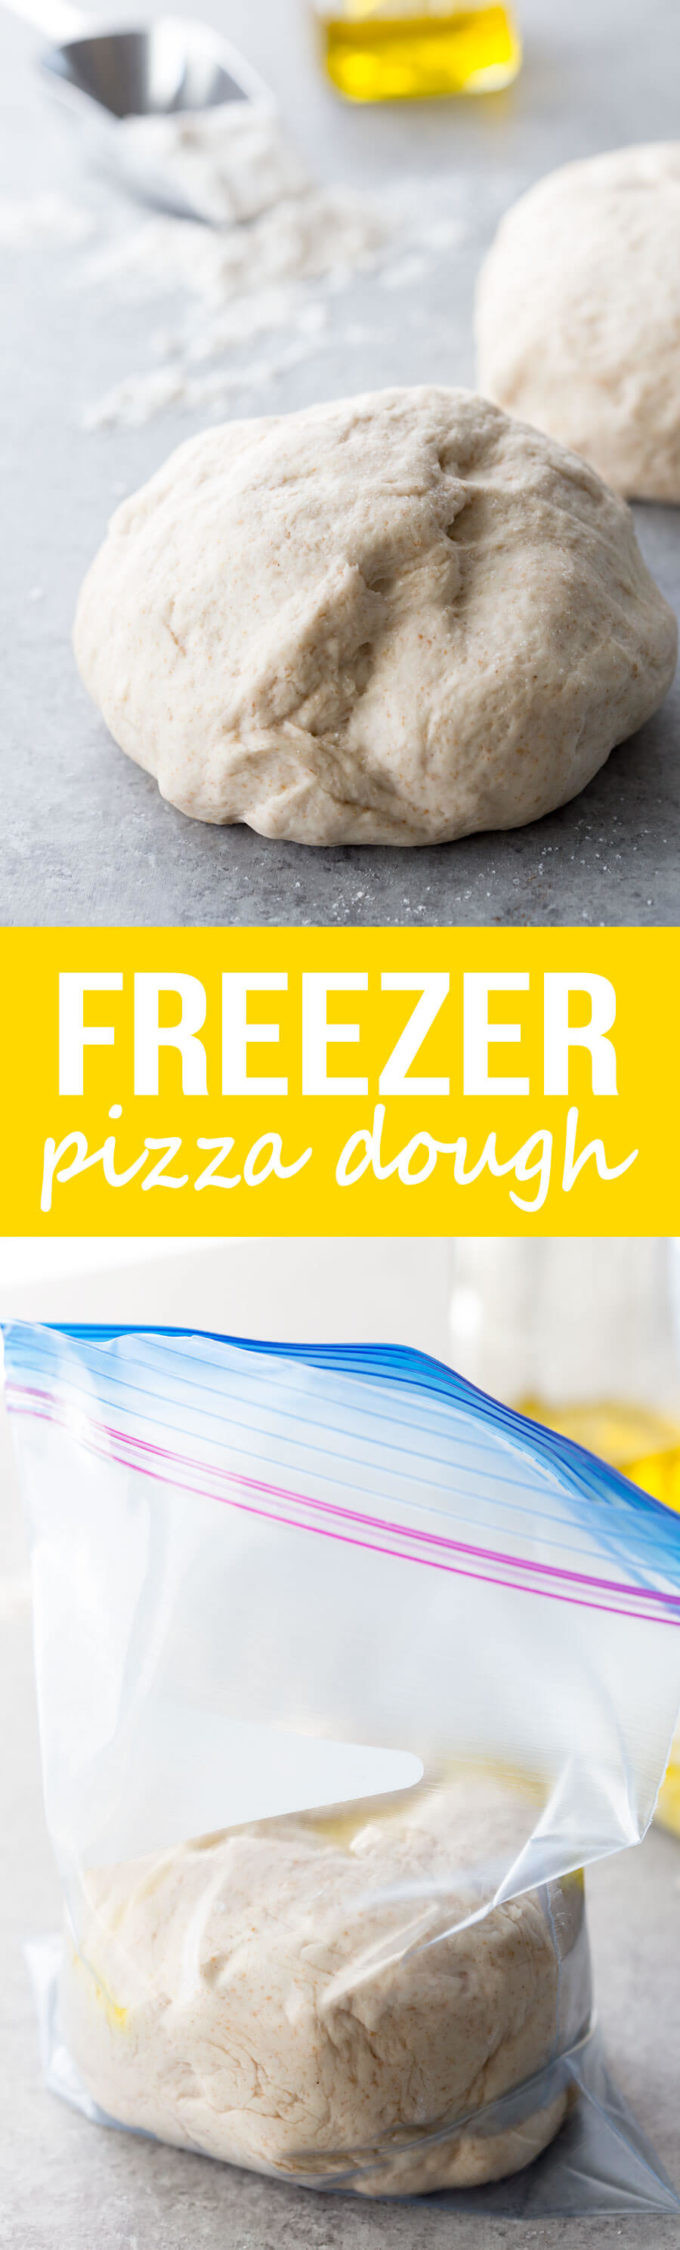 Pizza Dough Freezer
 Freezer Pizza Dough Easy Peasy Meals